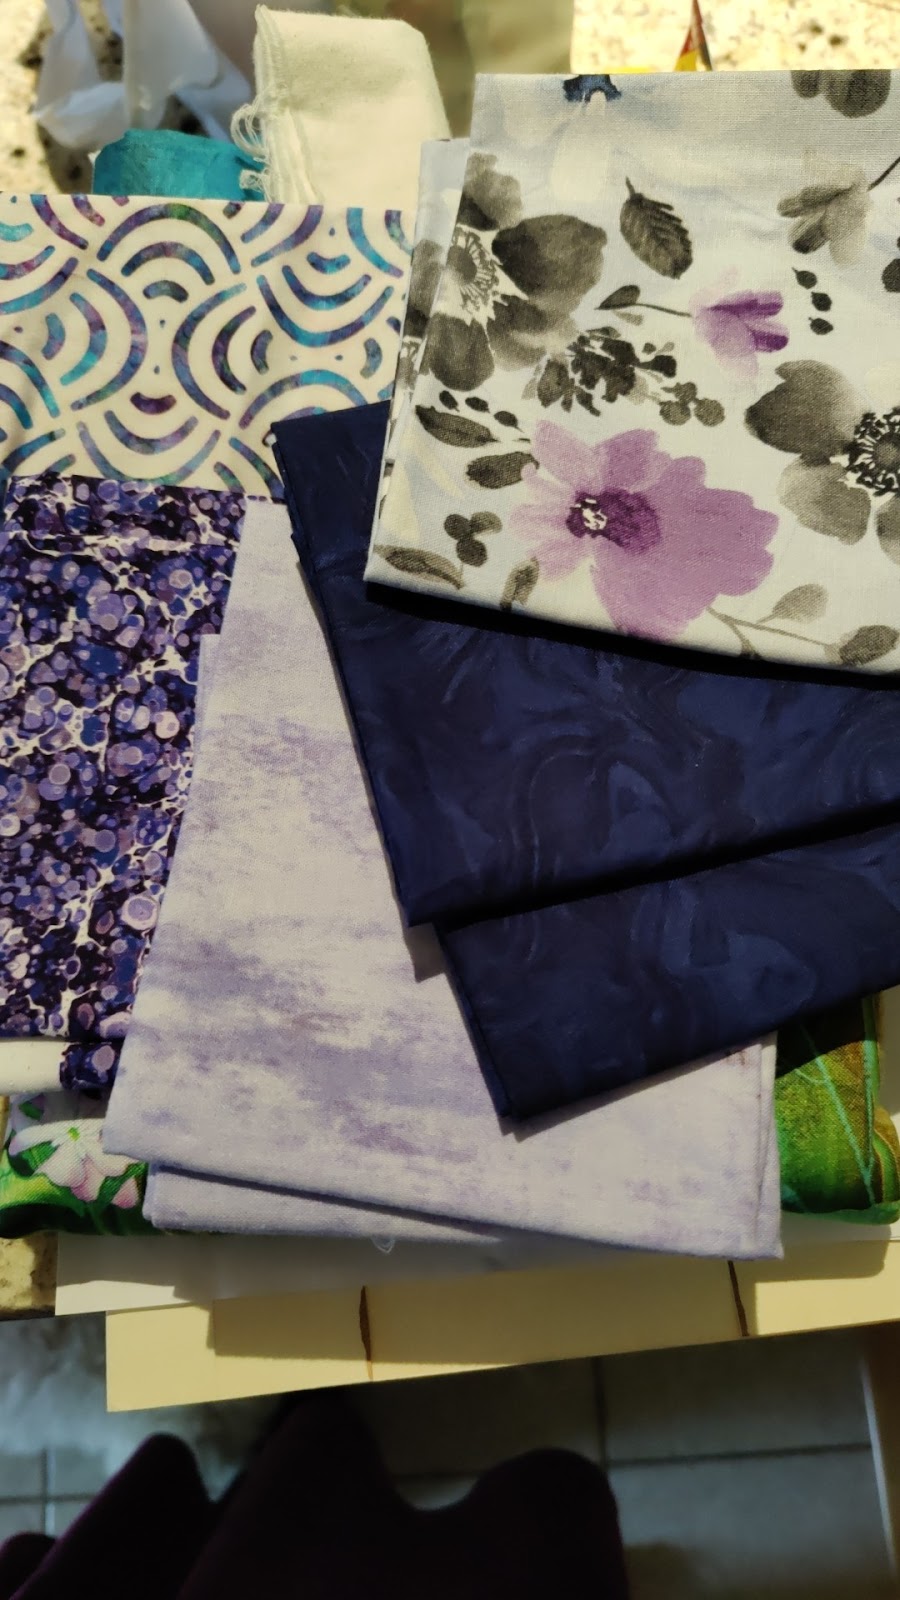 Creative Union Fabrics | 112 Kala Square Pl UNIT 3, Port Townsend, WA 98368, USA | Phone: (360) 379-0655